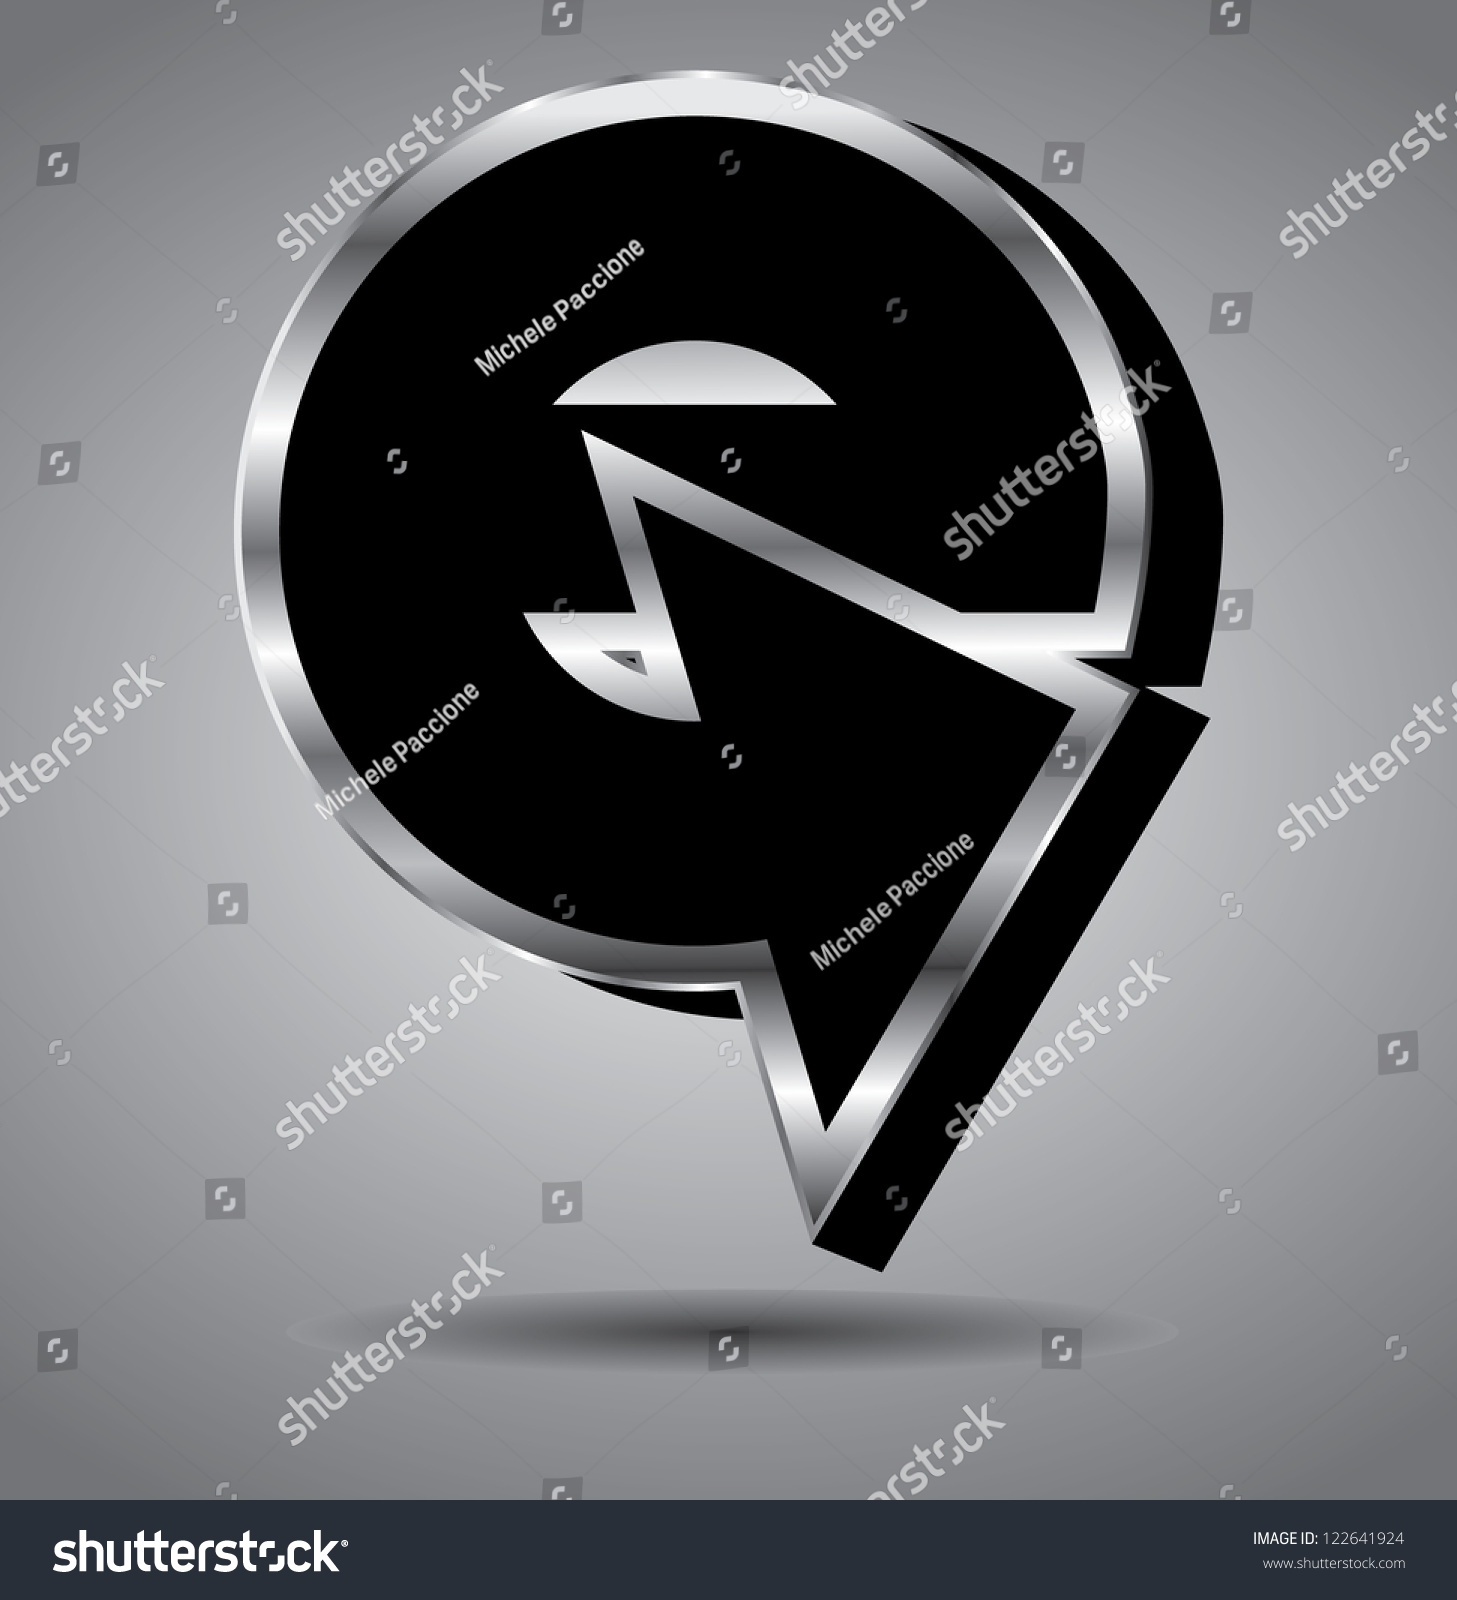 silver-arrow-alphabet-symbol-icon-lower-stock-illustration-122641924-shutterstock